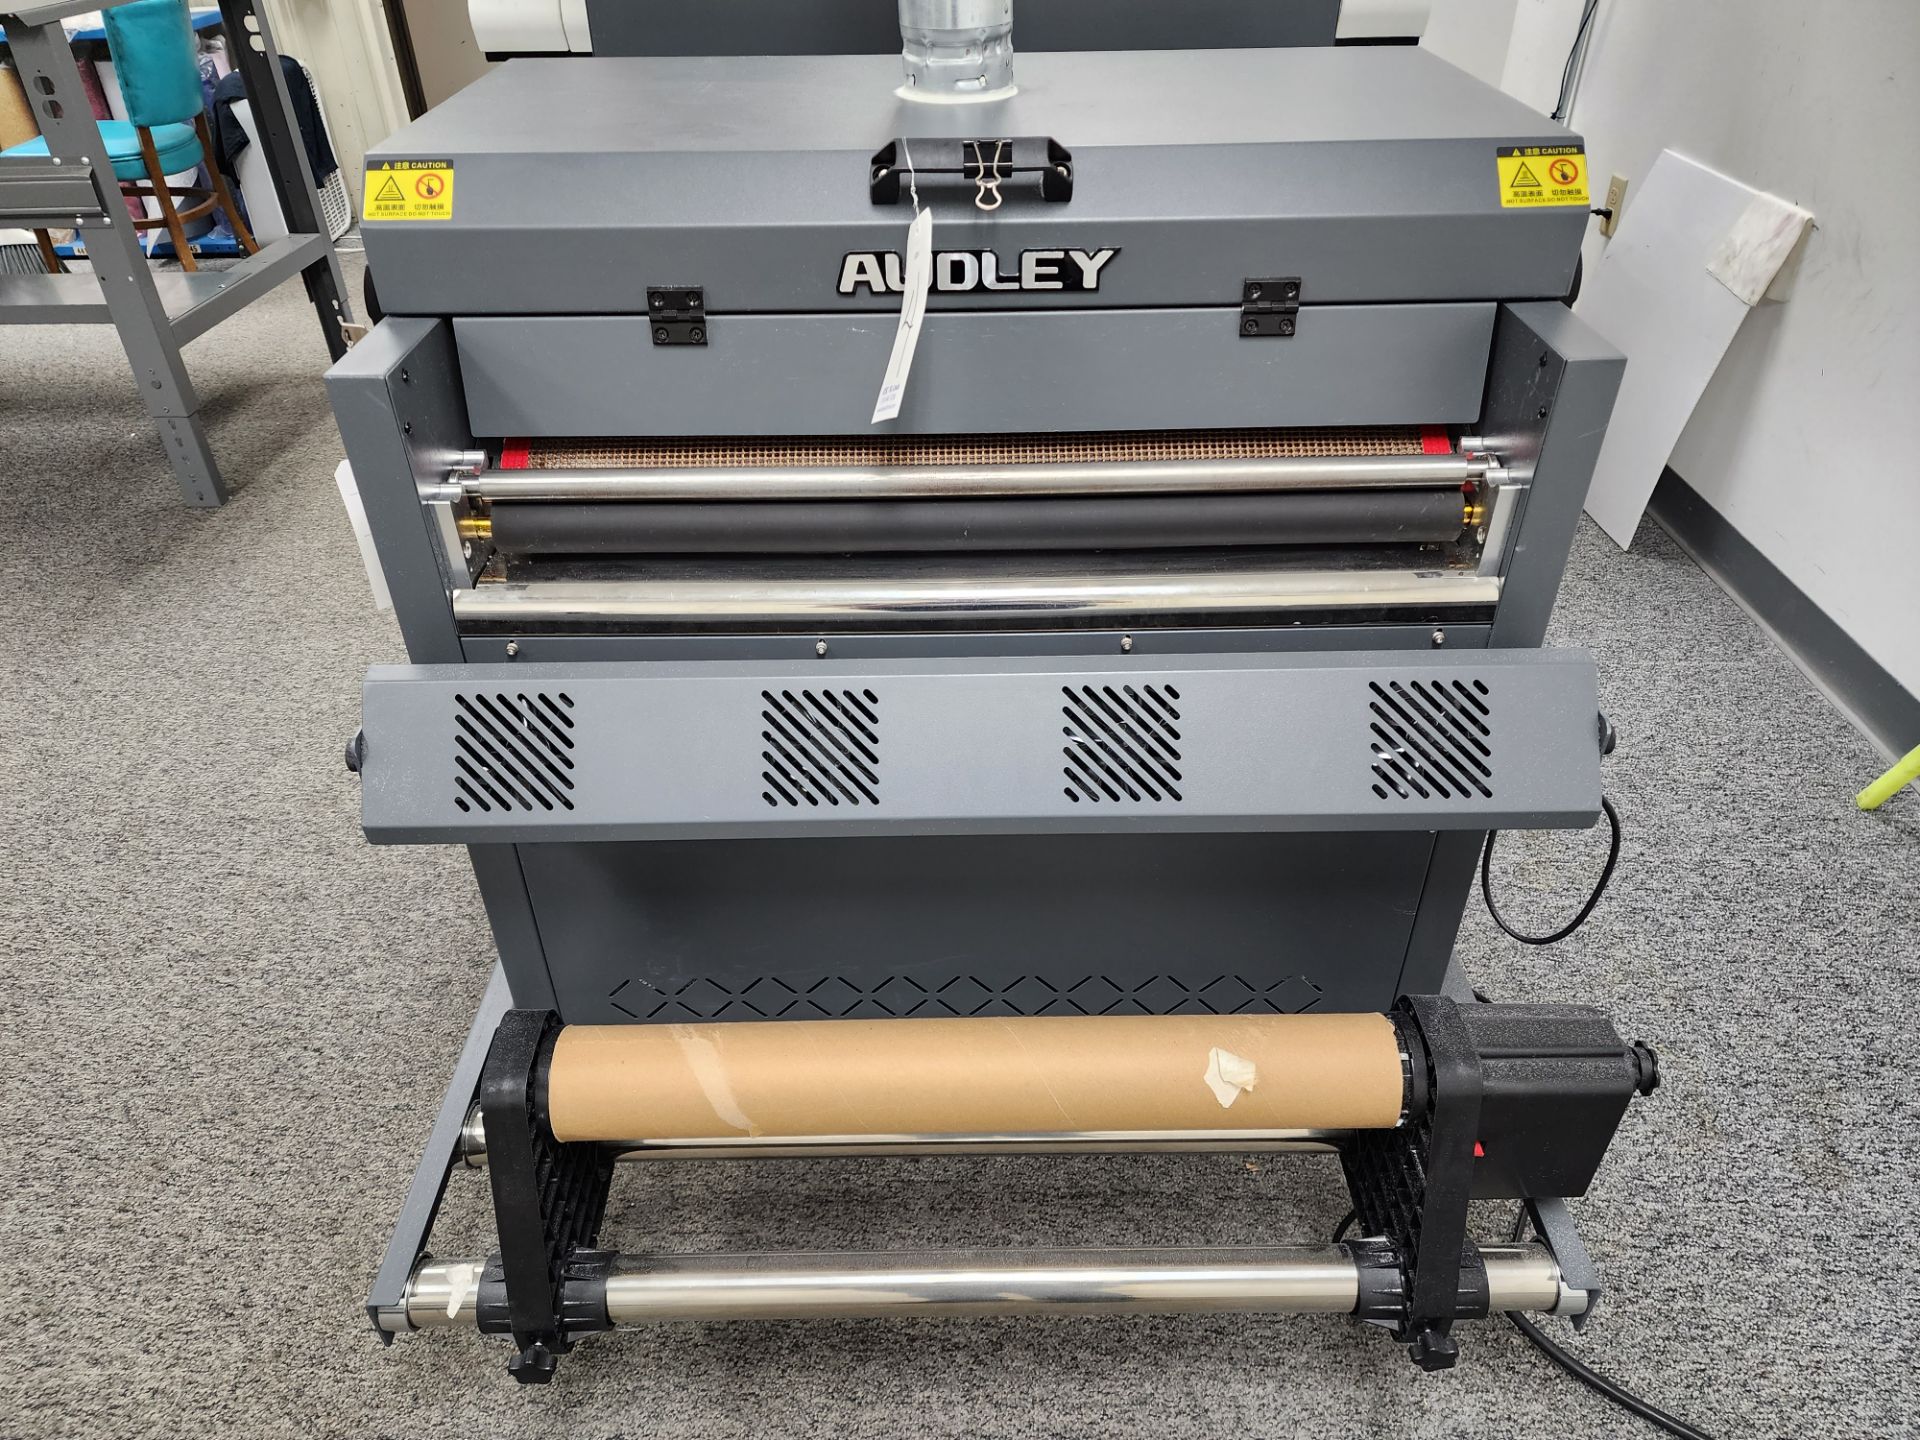 Audley Model S2070-3B(i3200) Printer, w/Audley Model JD-700 DTF Direct To Film Printer - Image 9 of 16